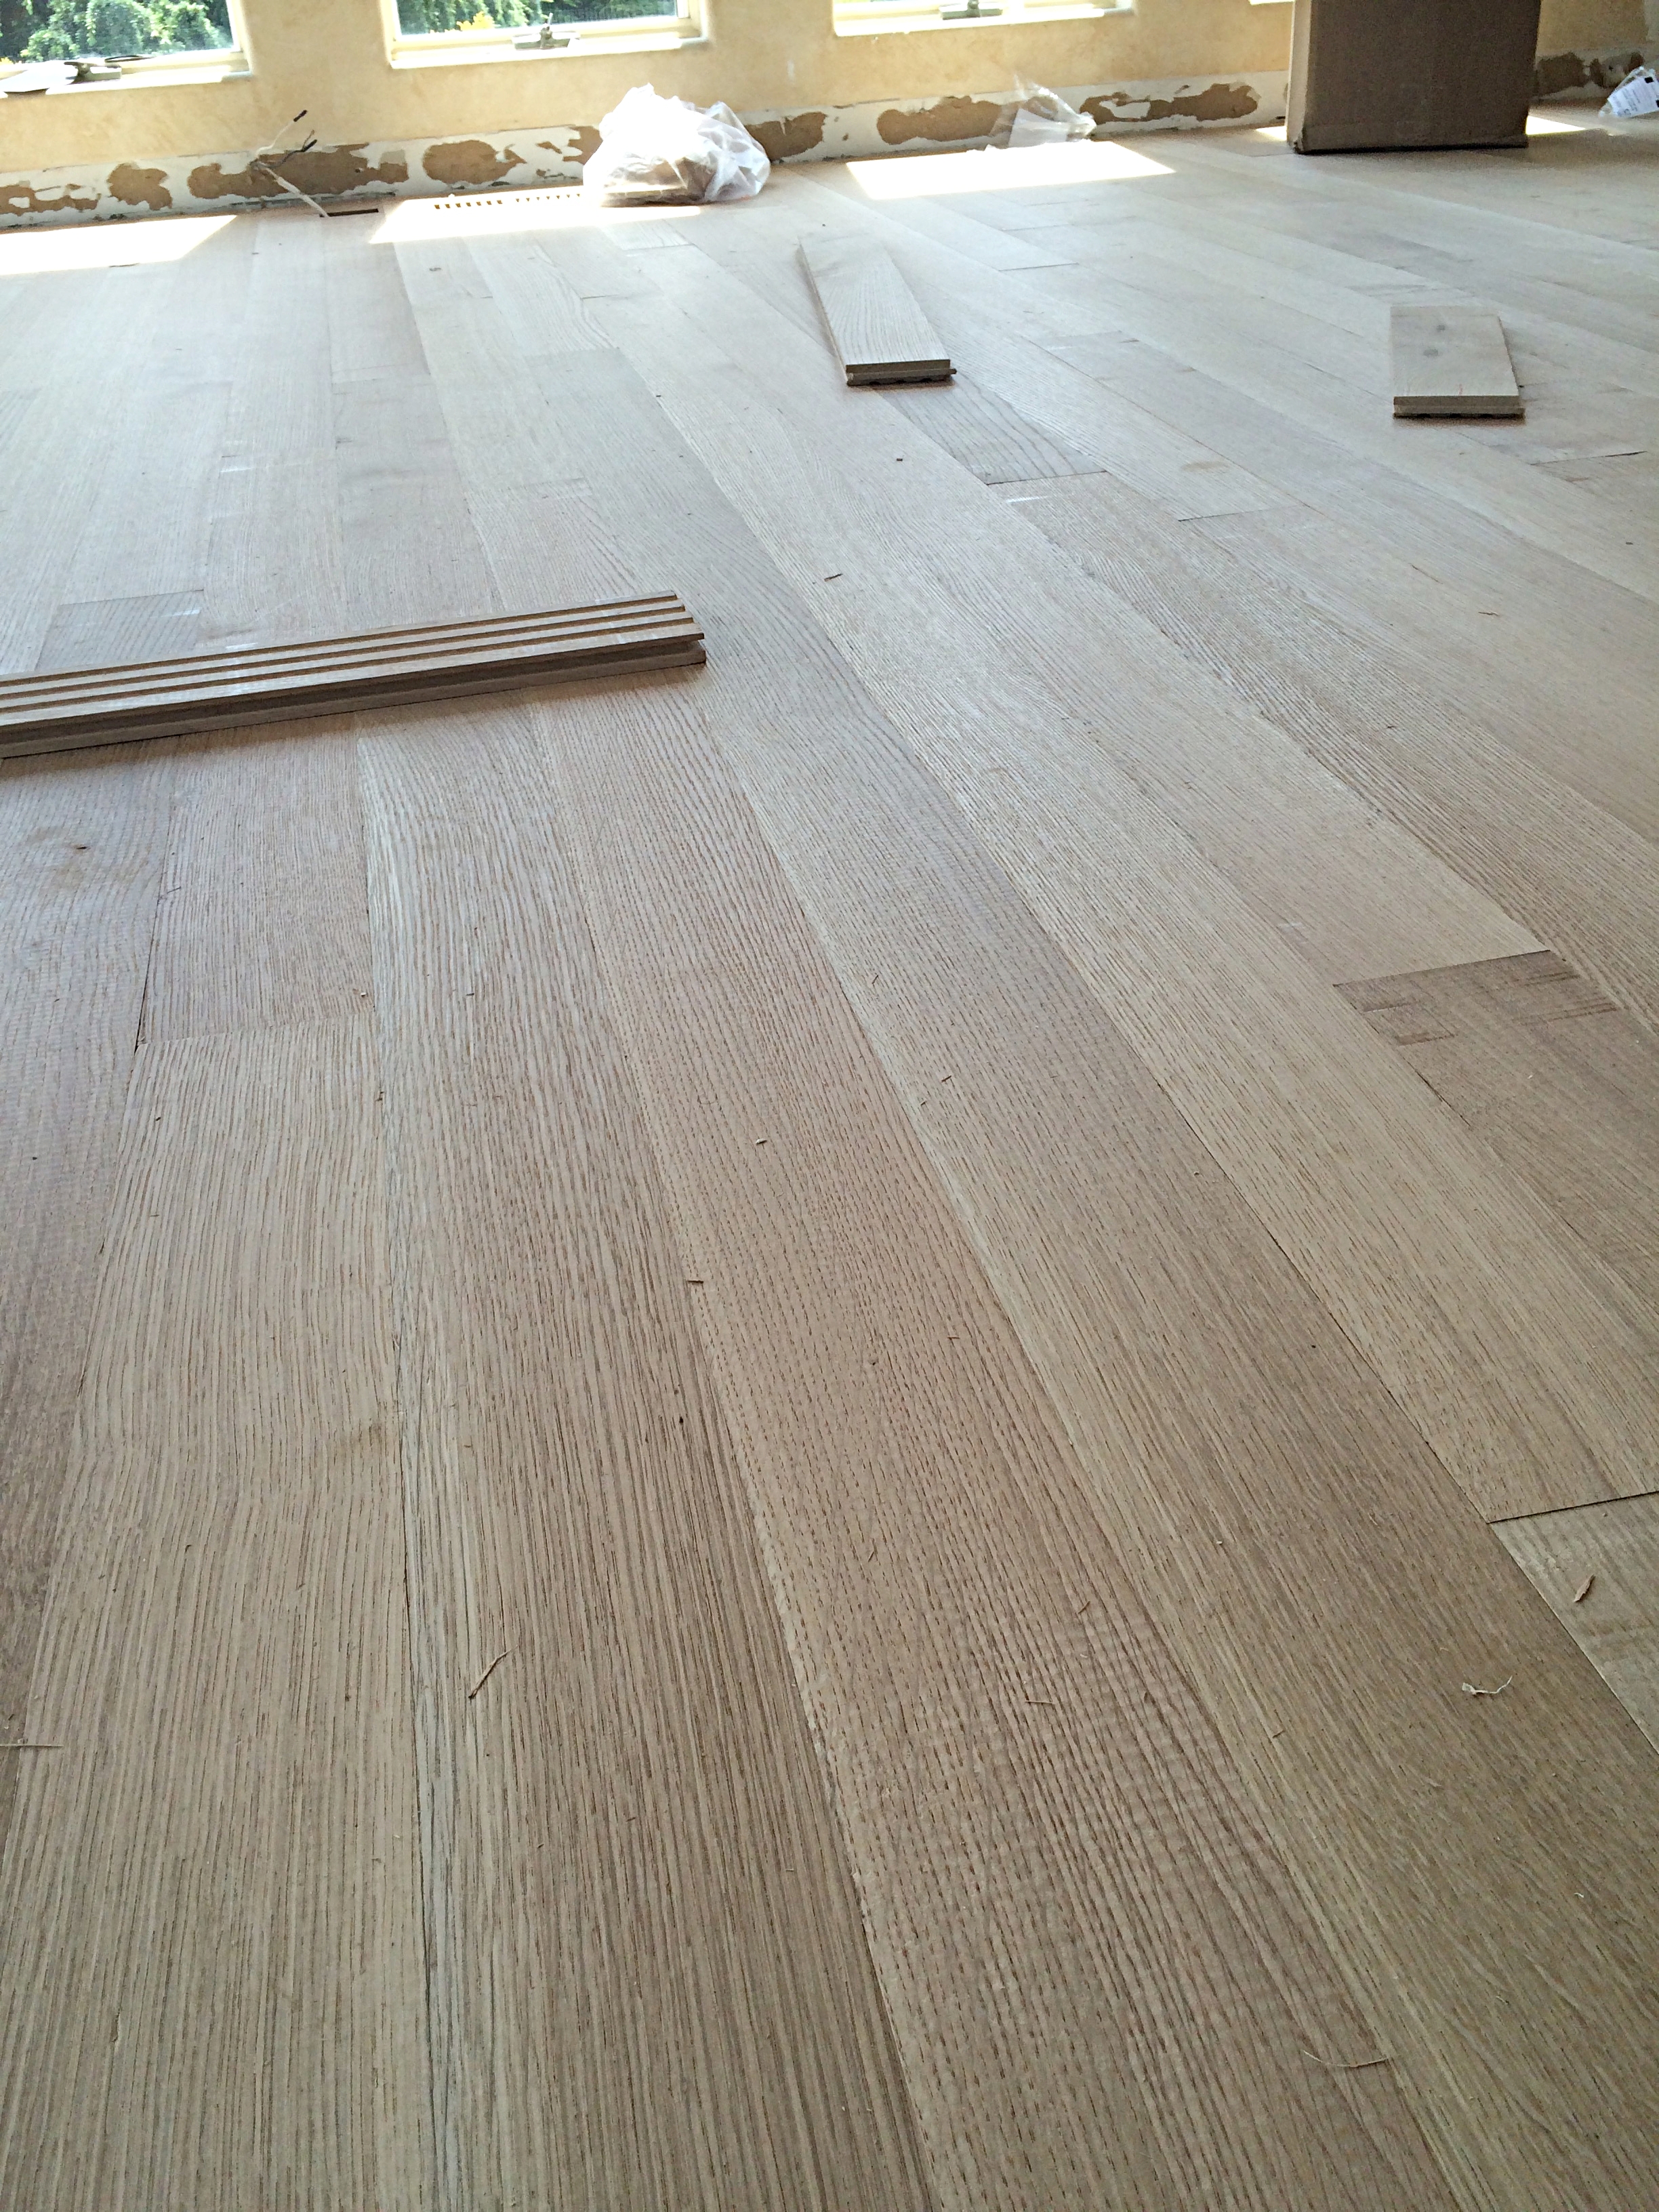 Rift And Quarter Sawn Hardwood Flooring, What Is Quarter Sawn Oak Flooring